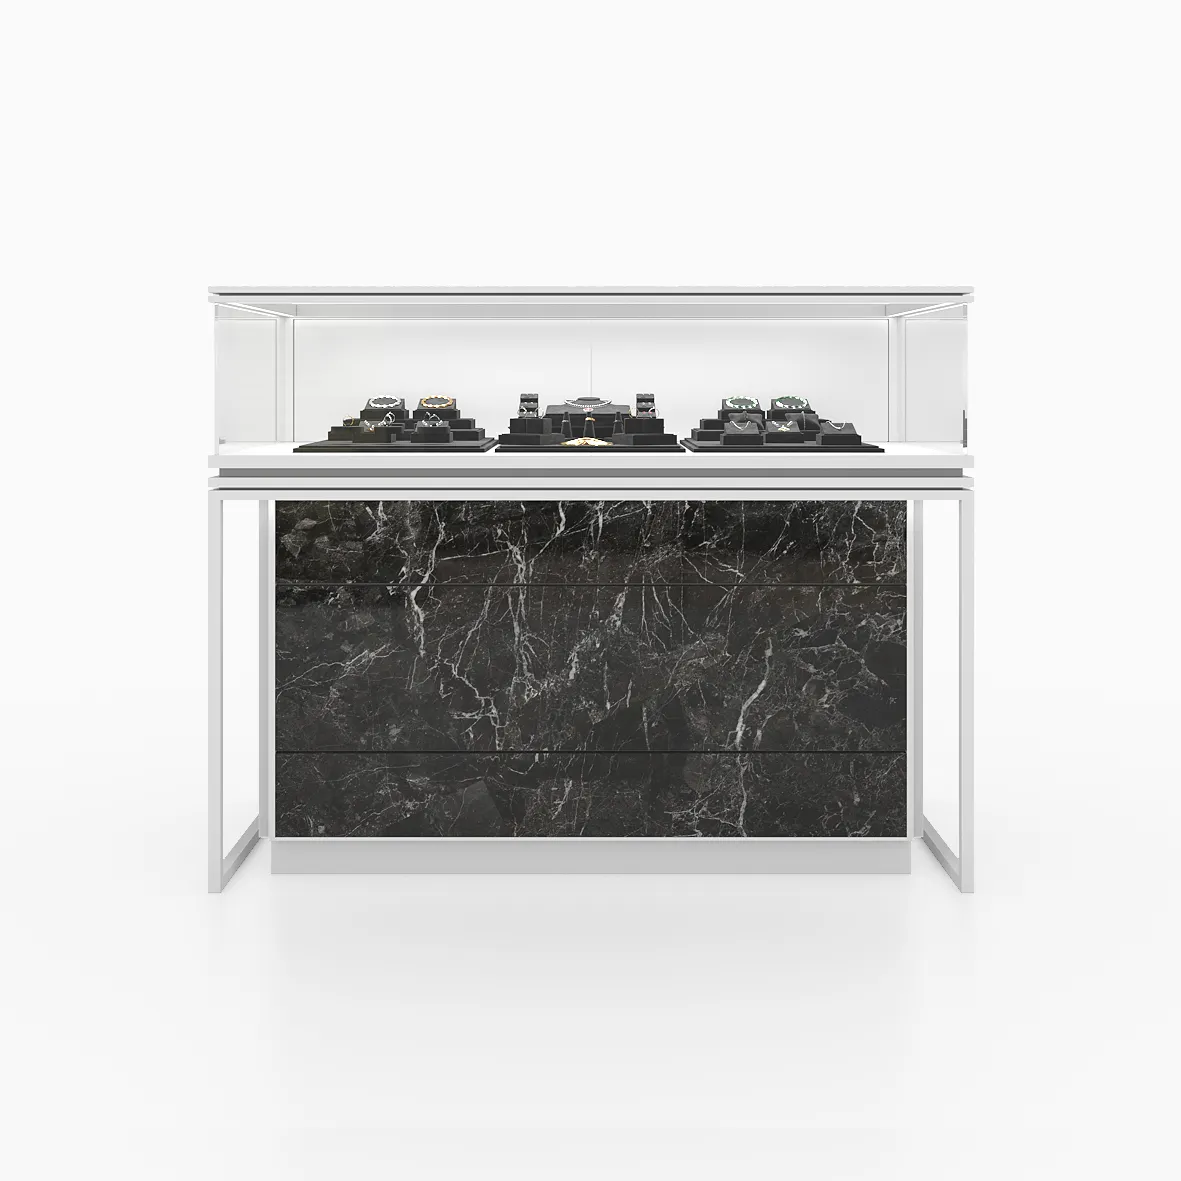 Unique diamond brand marble surface design glass custom table jewelry shop display showcase furniture